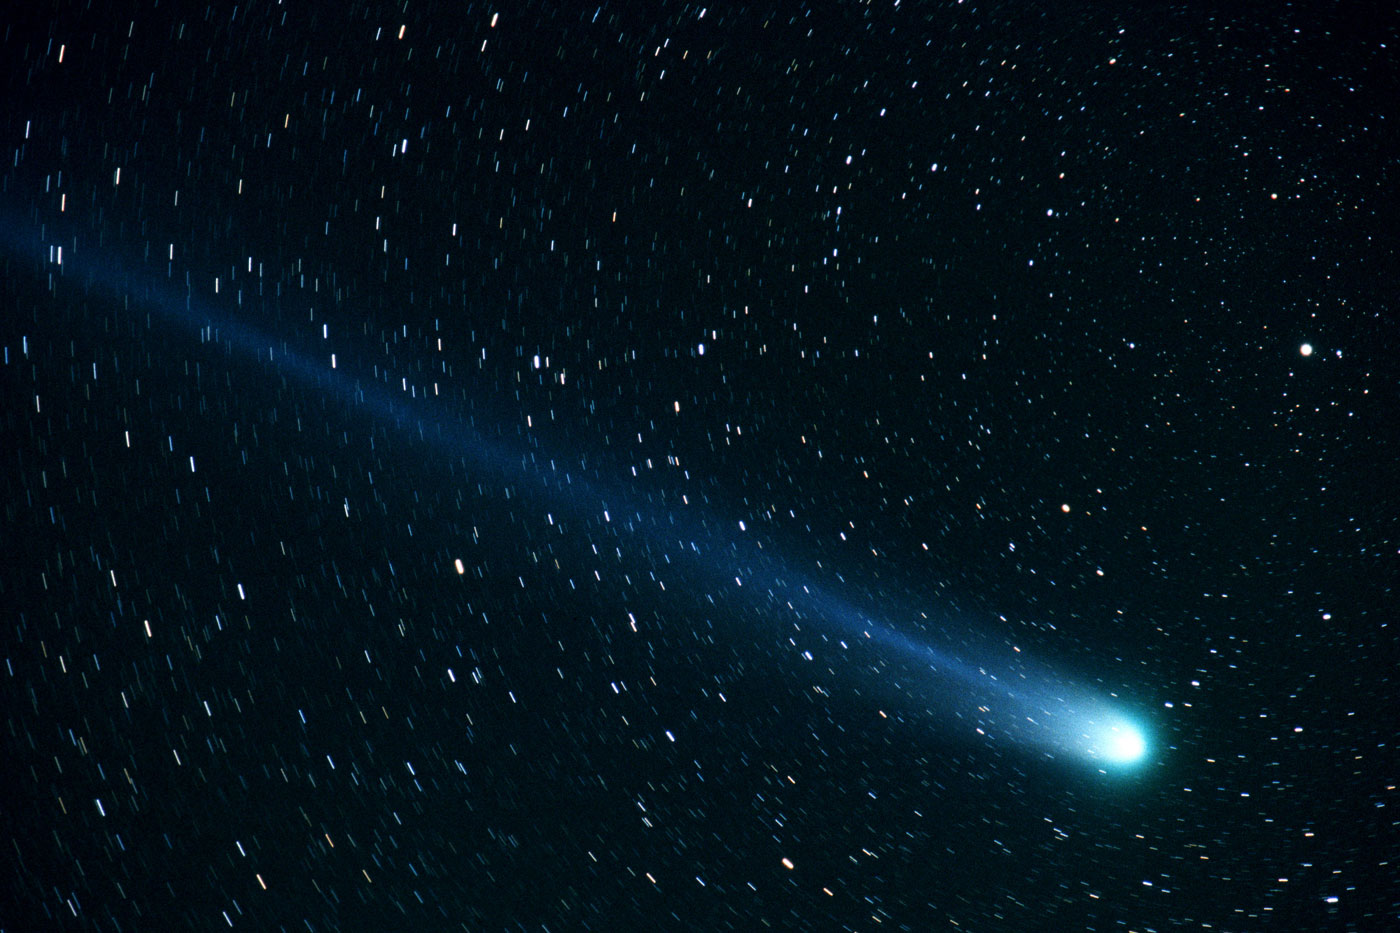 Photo of a comet shooting across a starry sky.